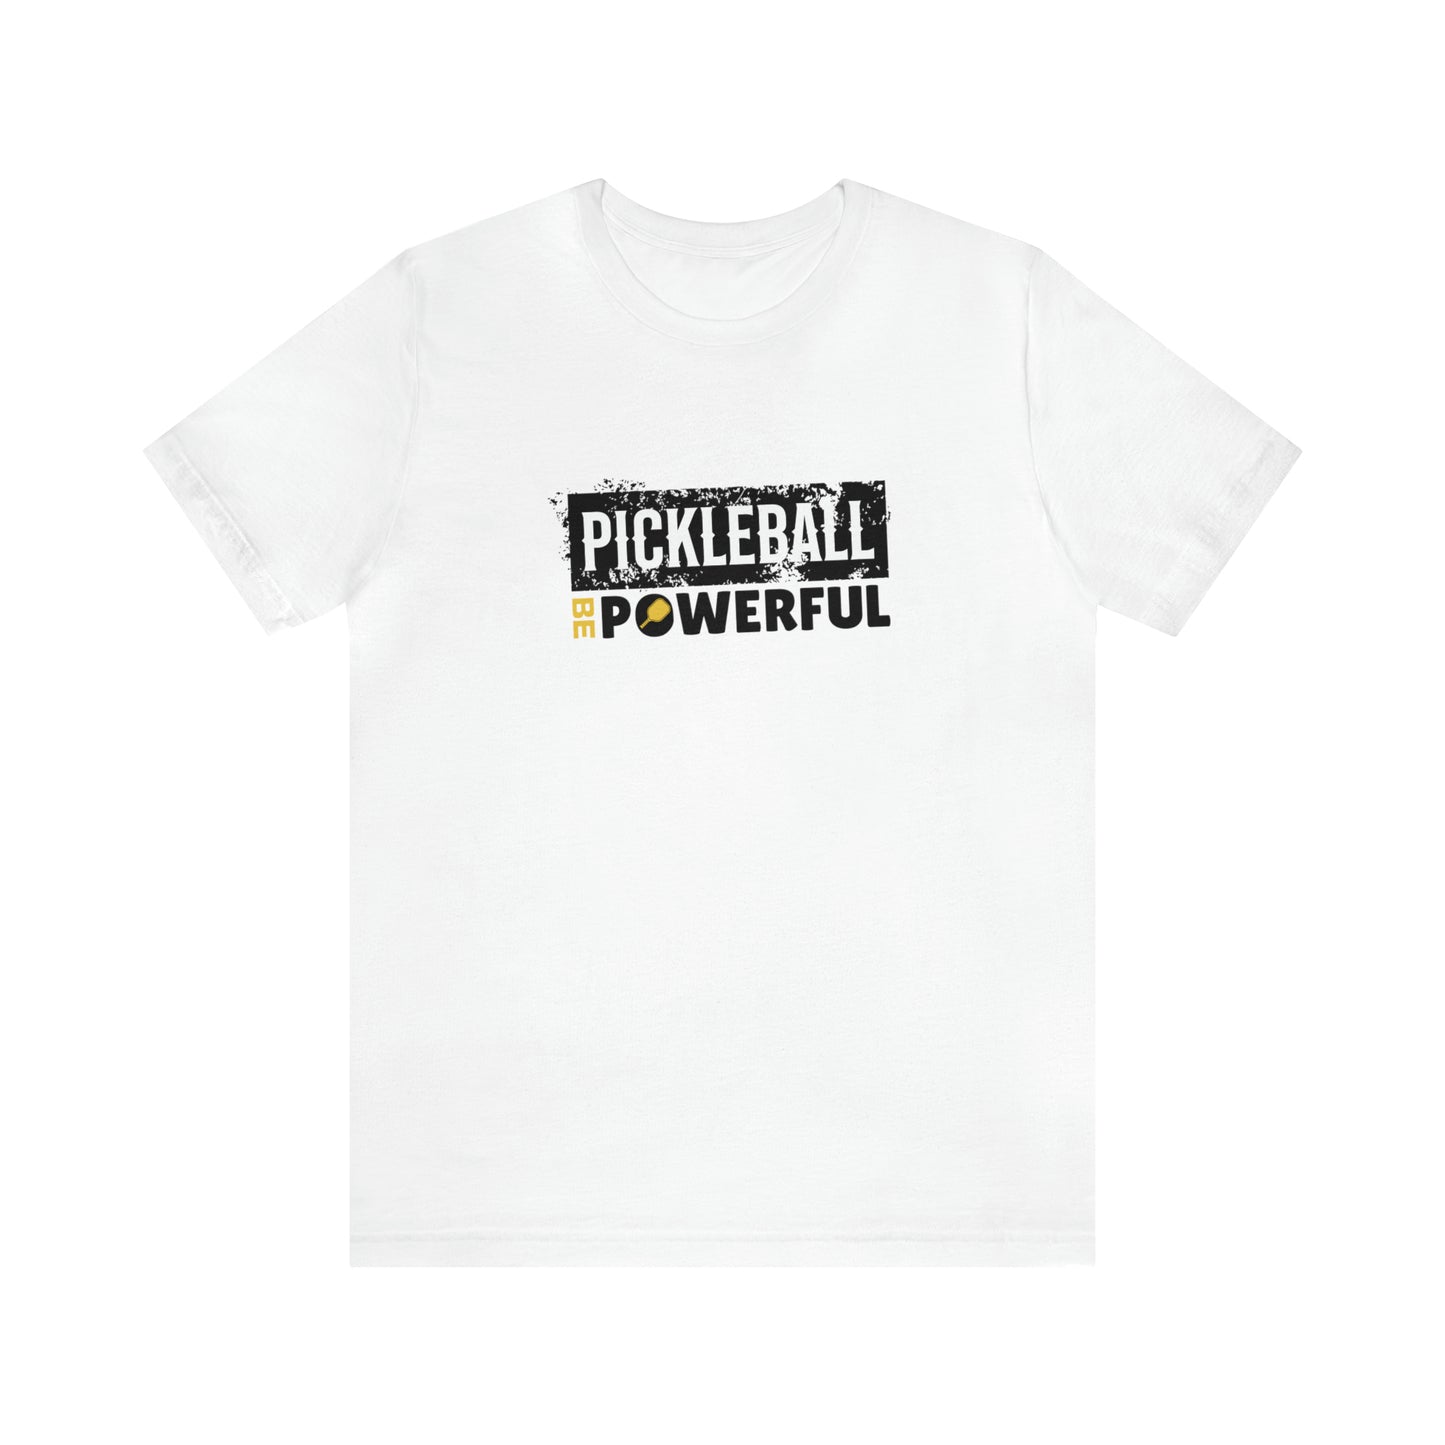 Powerful Pickleball Unisex Cotton T-Shirt